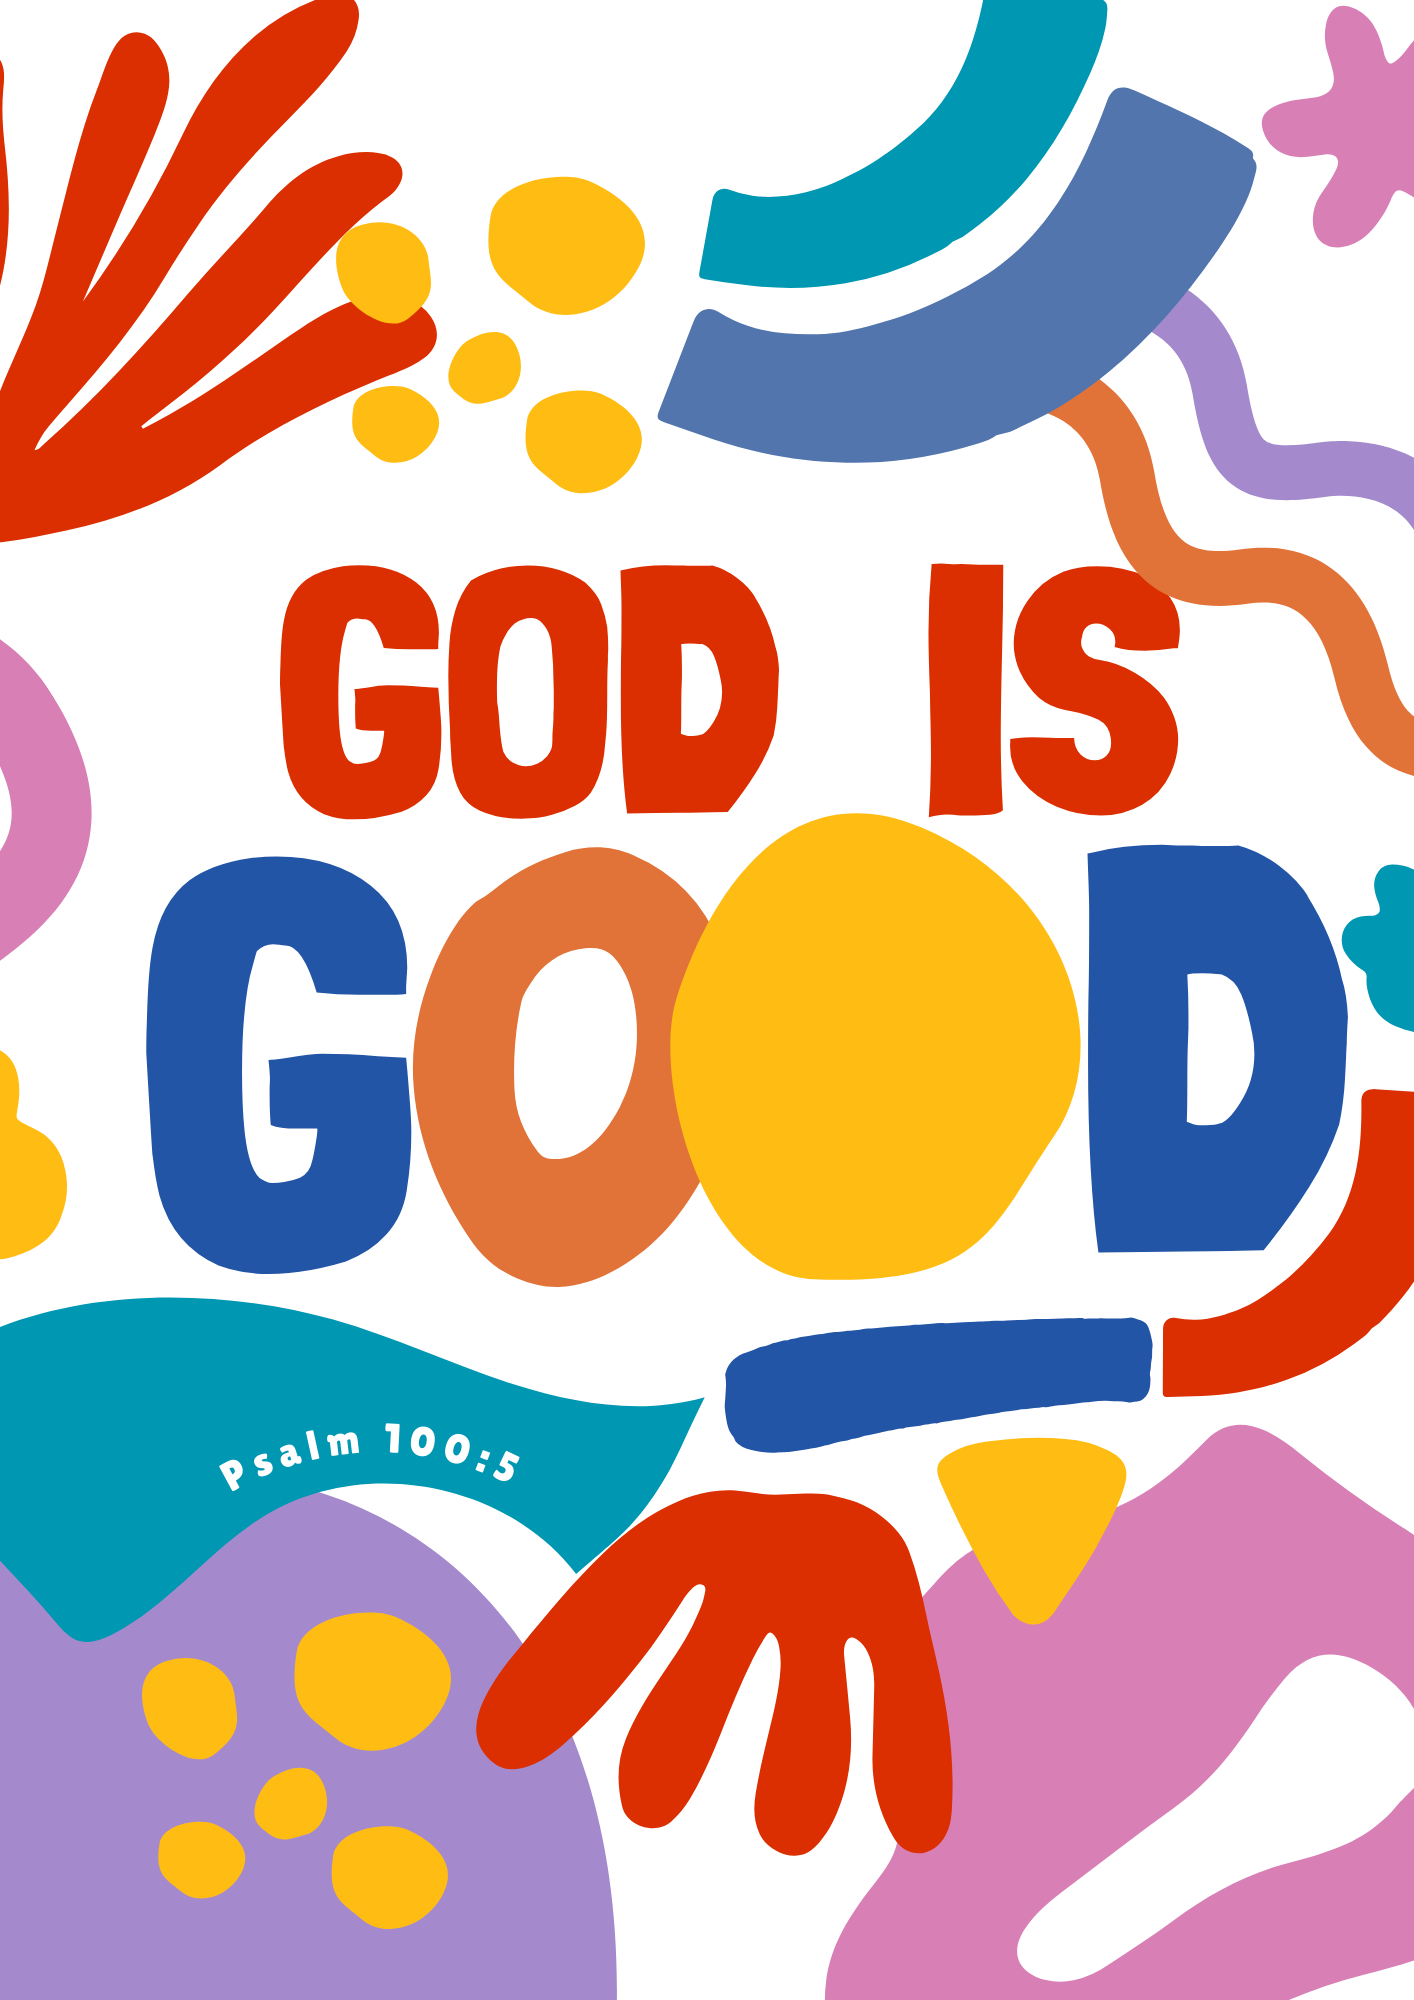 God is Good - Vibrant Abstract Art Print